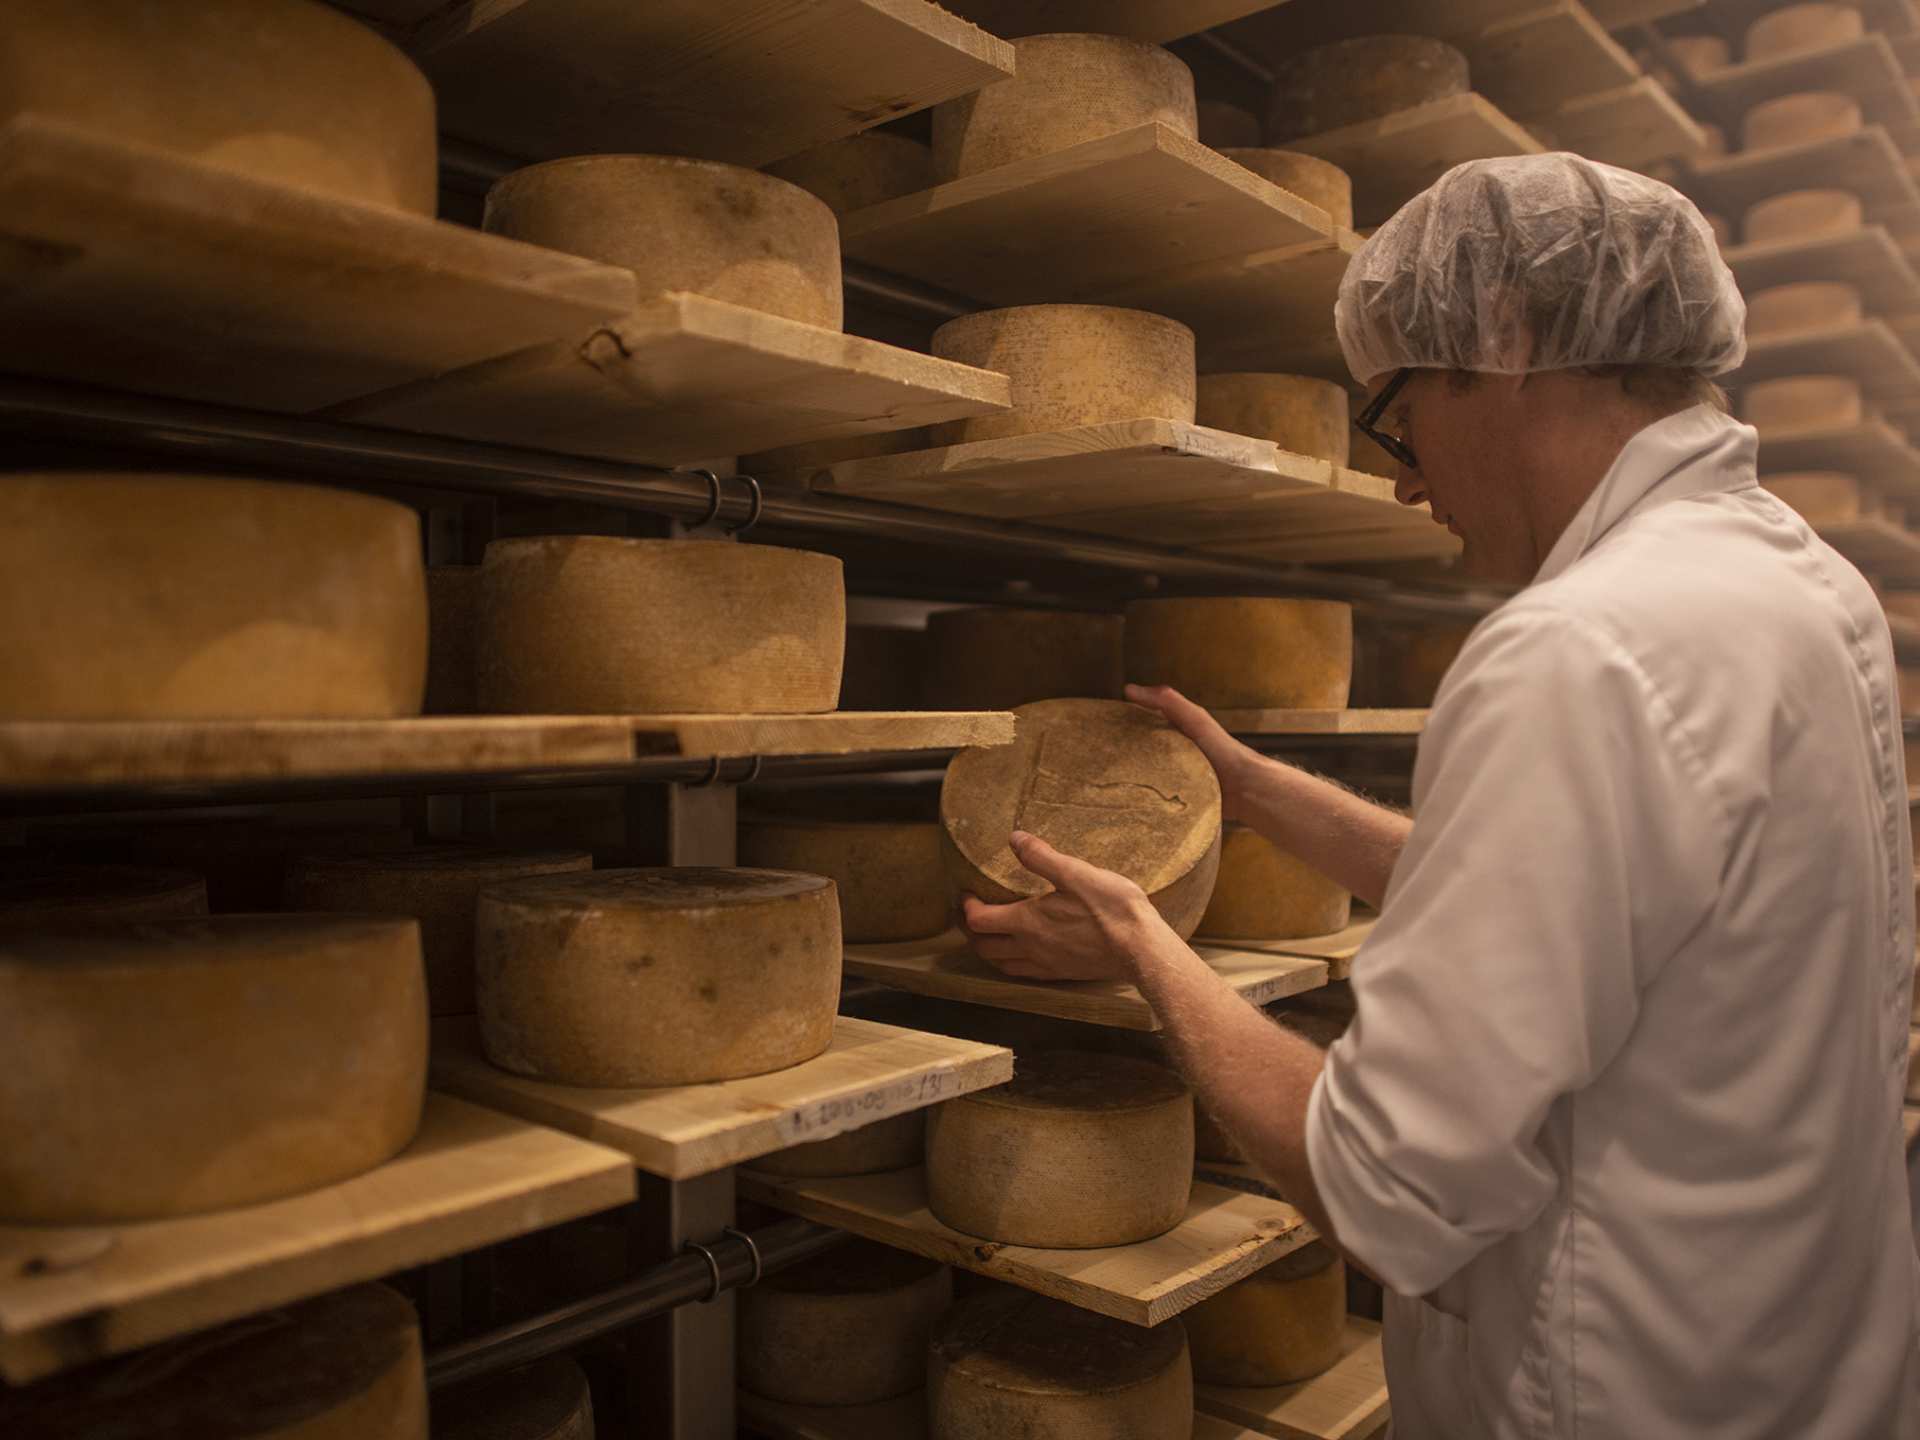 A Québecois cheesemaker examining a wheel of cheese